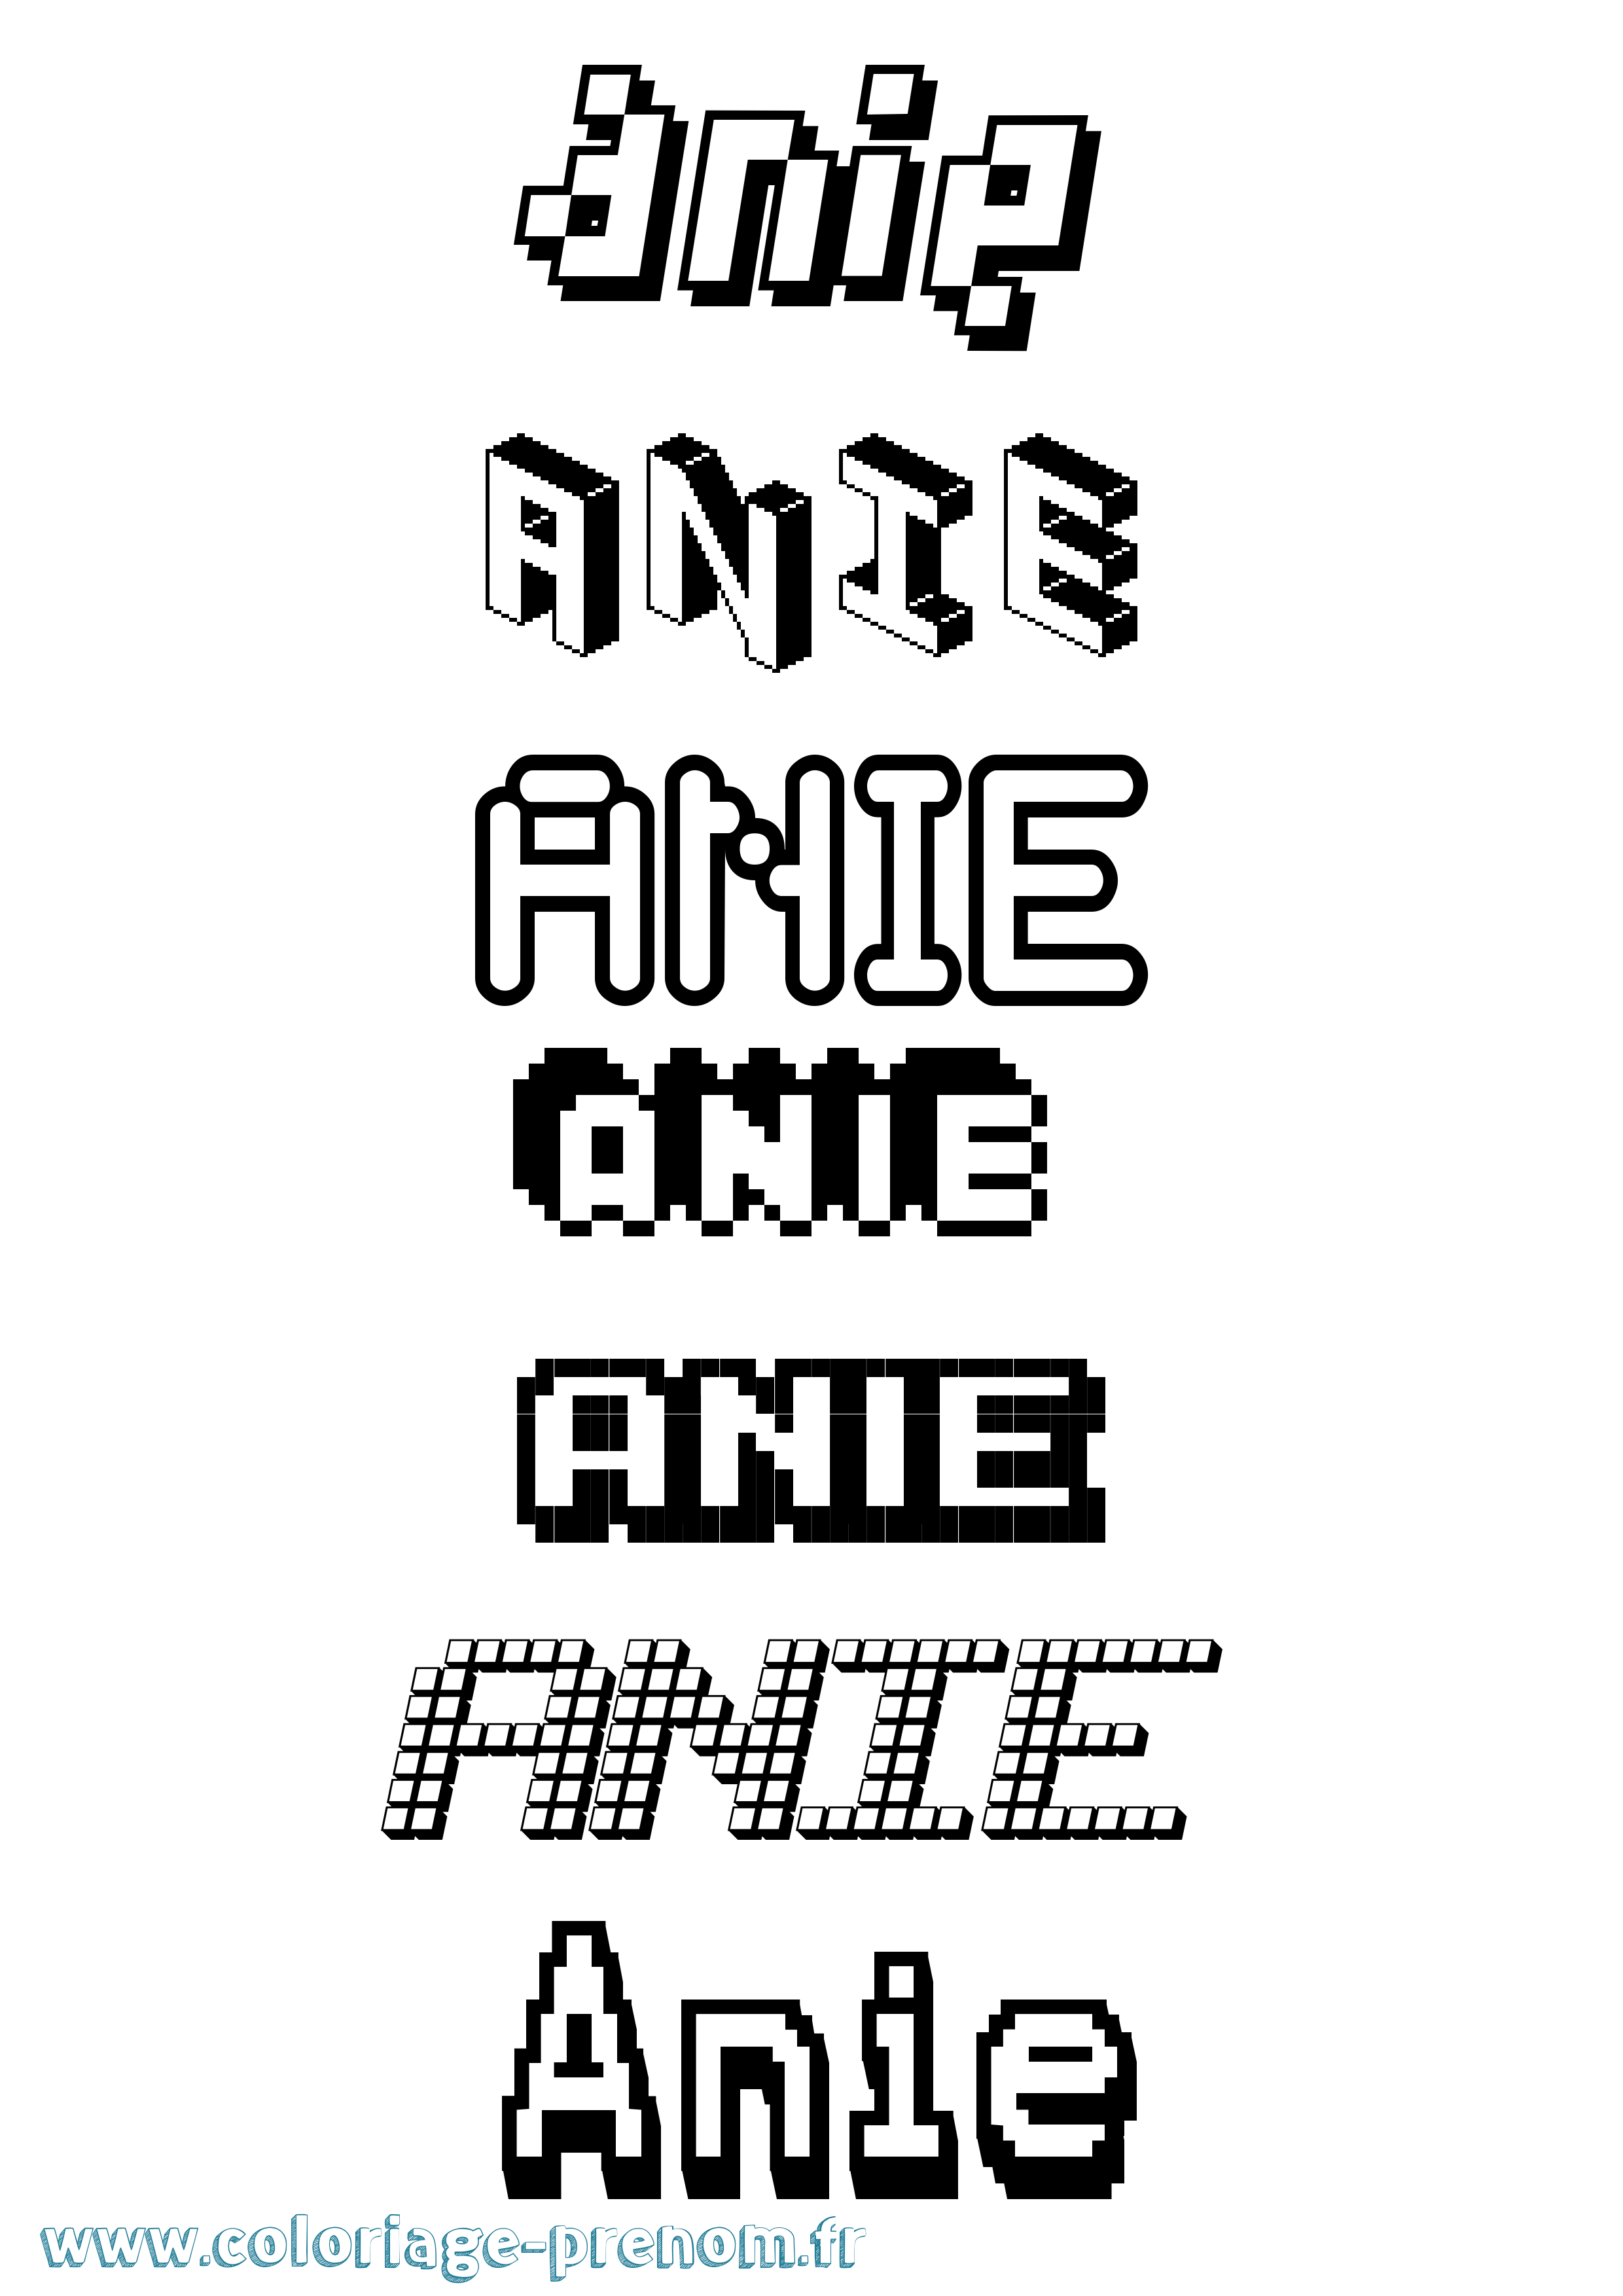 Coloriage prénom Anie Pixel